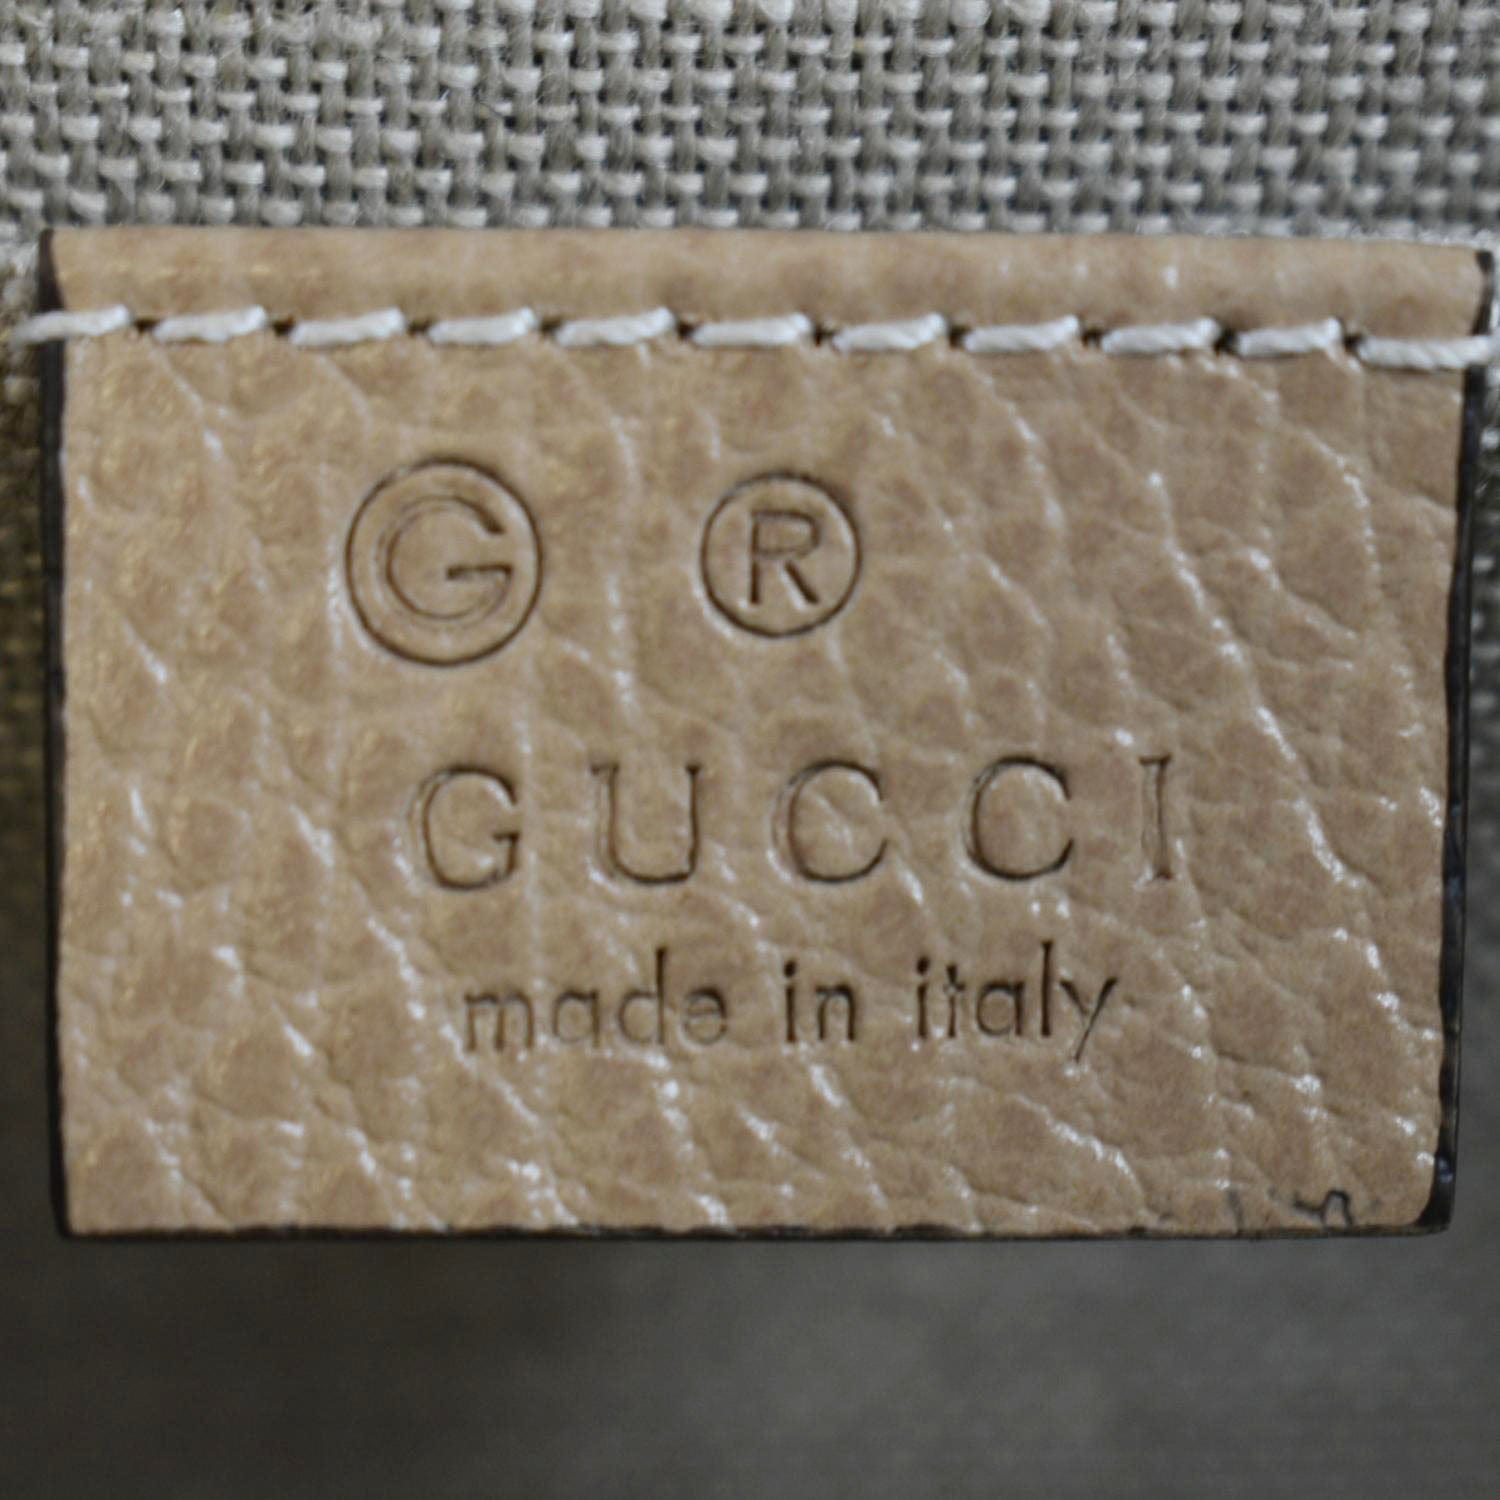 Gucci Interlocking G Calfskin Leather Shoulder Bag Beige 510304